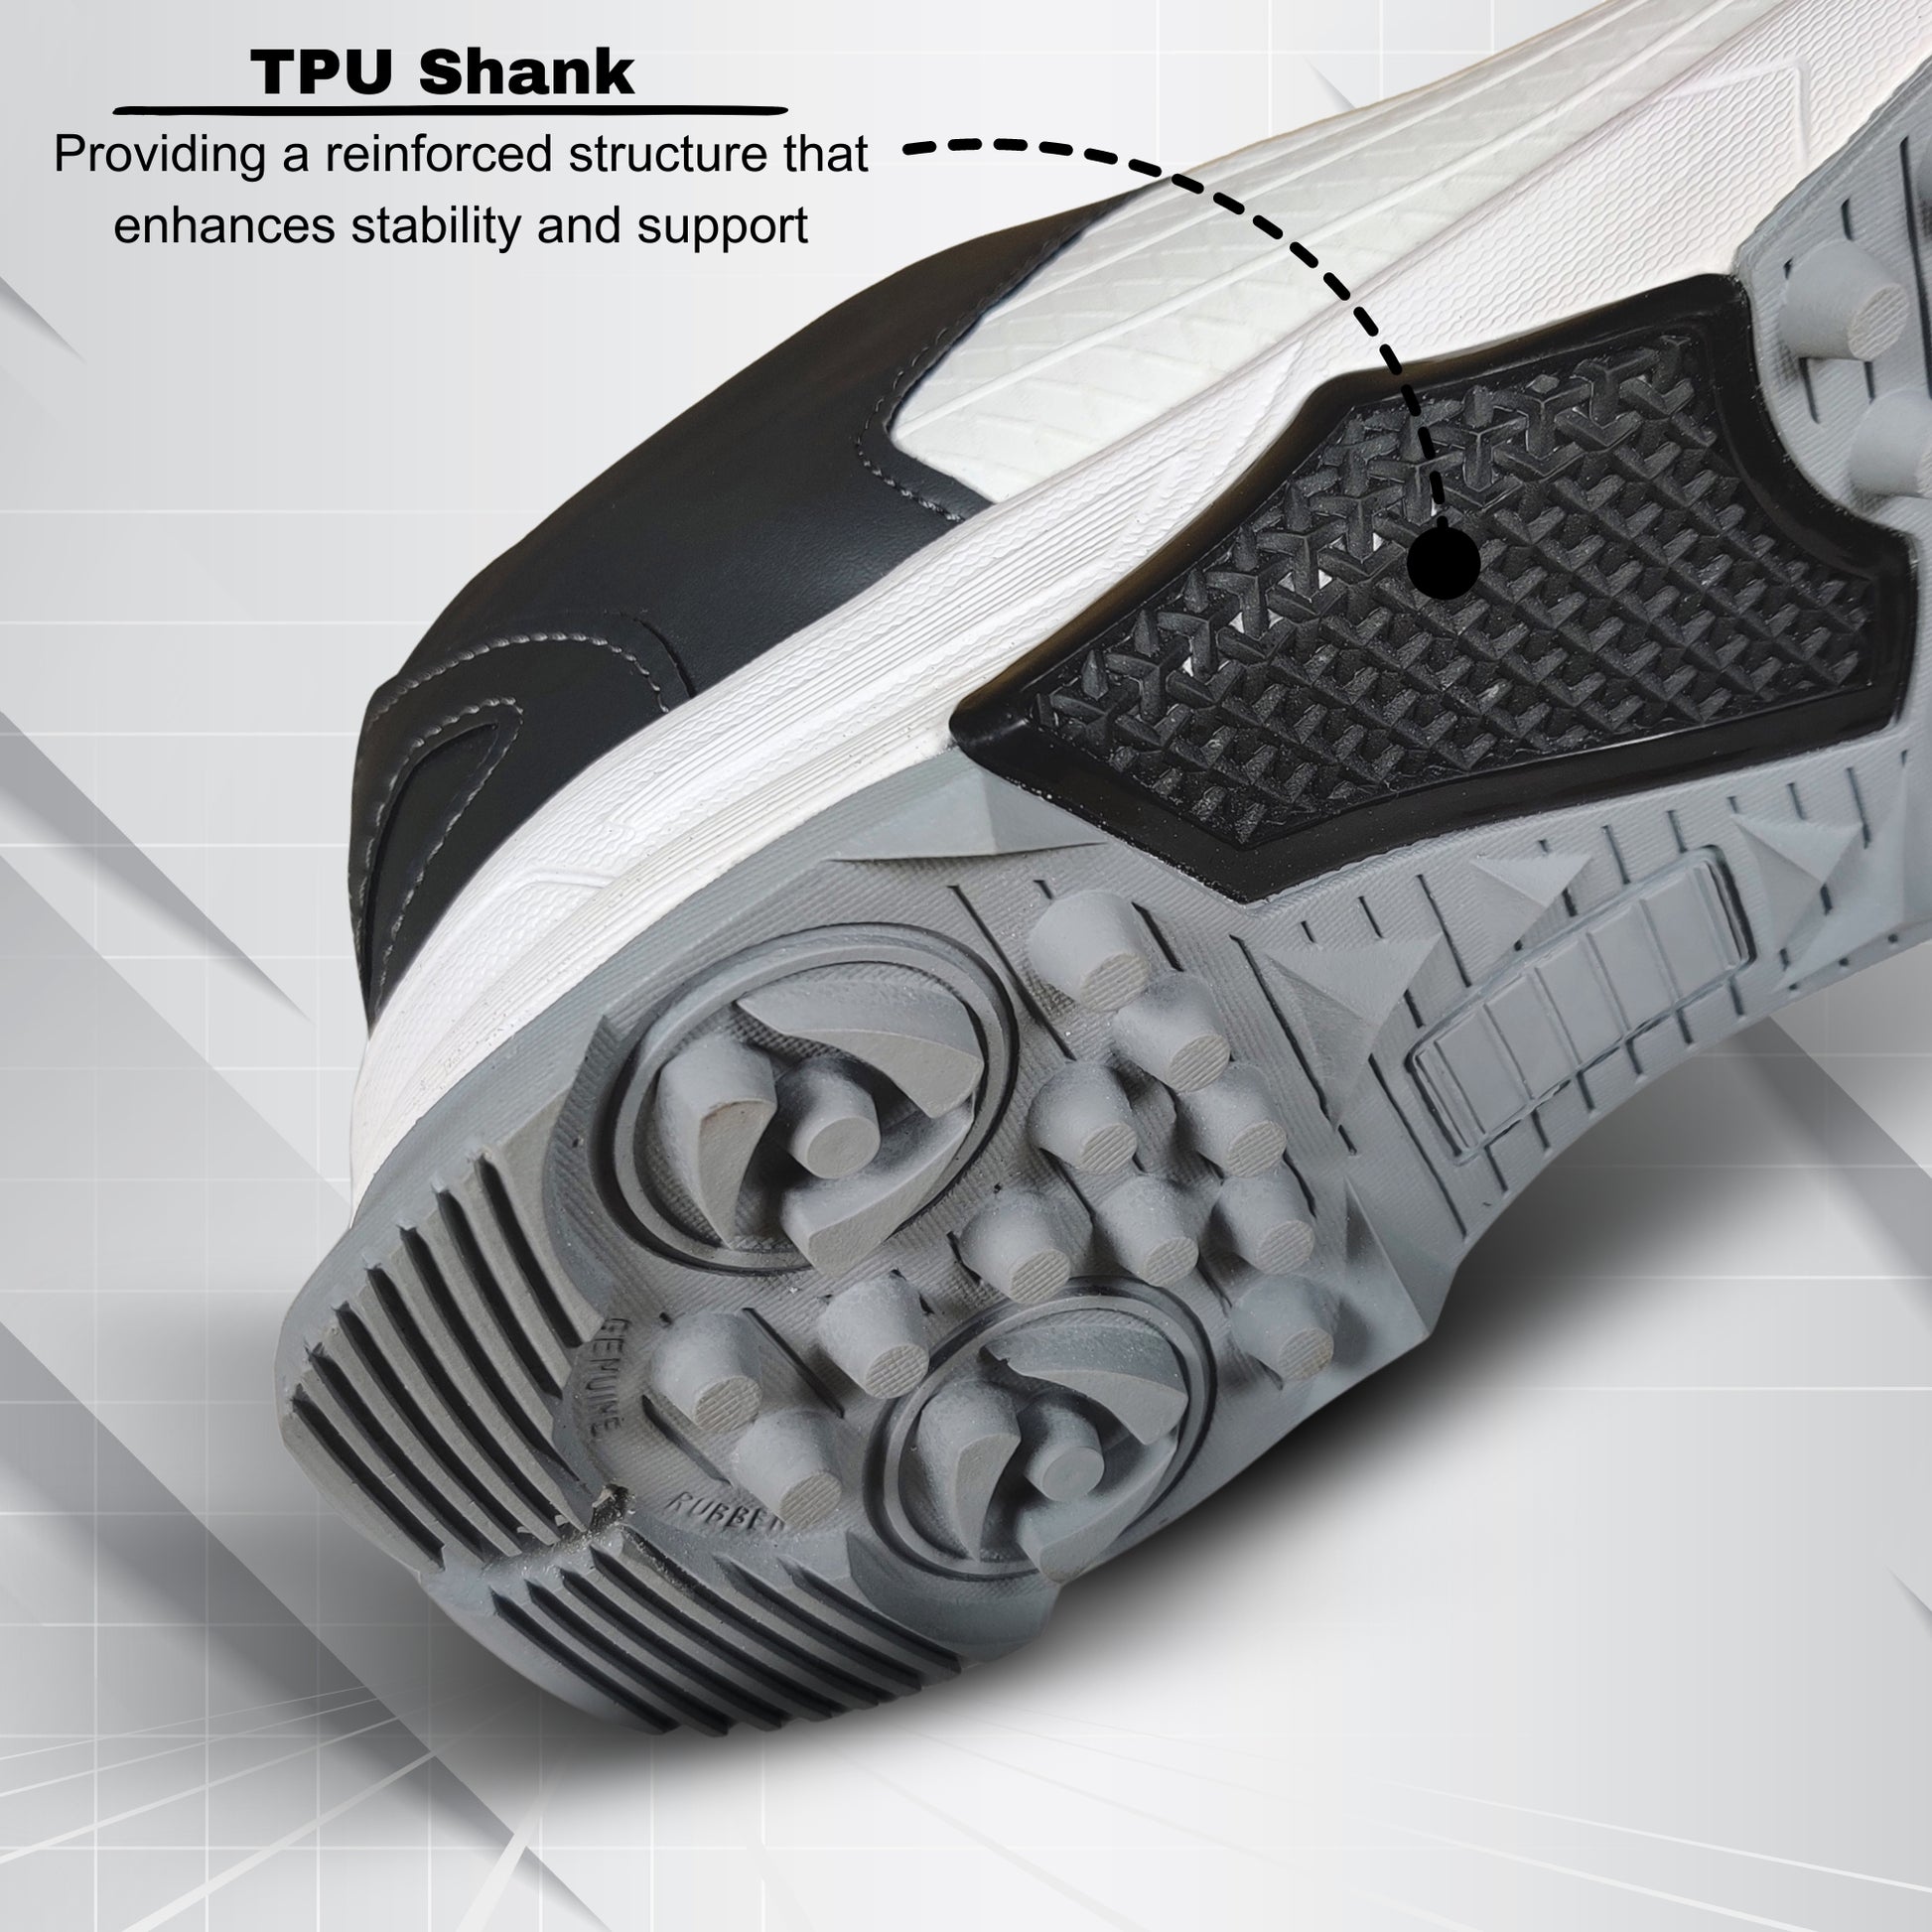 Prokick Strikers Genuine Rubber Spike Cricket Shoes - Best Price online Prokicksports.com